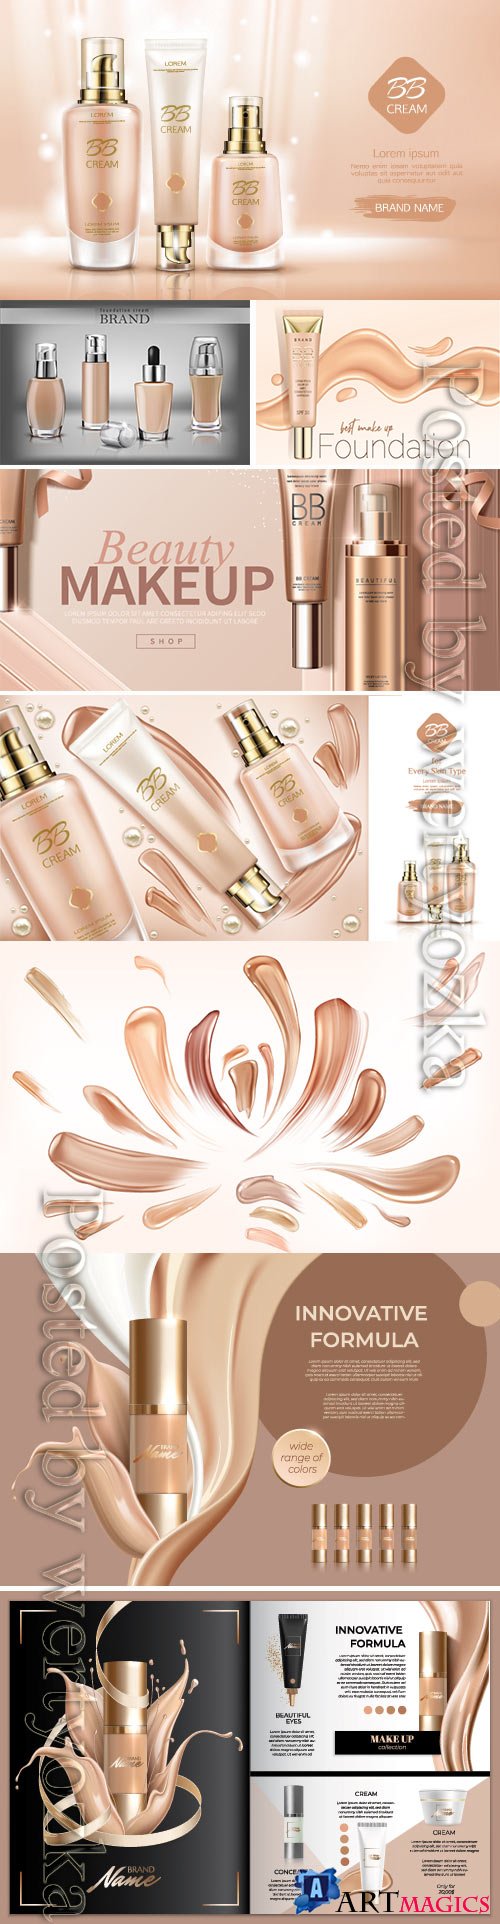 Bb cream beauty cosmetics and smears foundation vector illustration